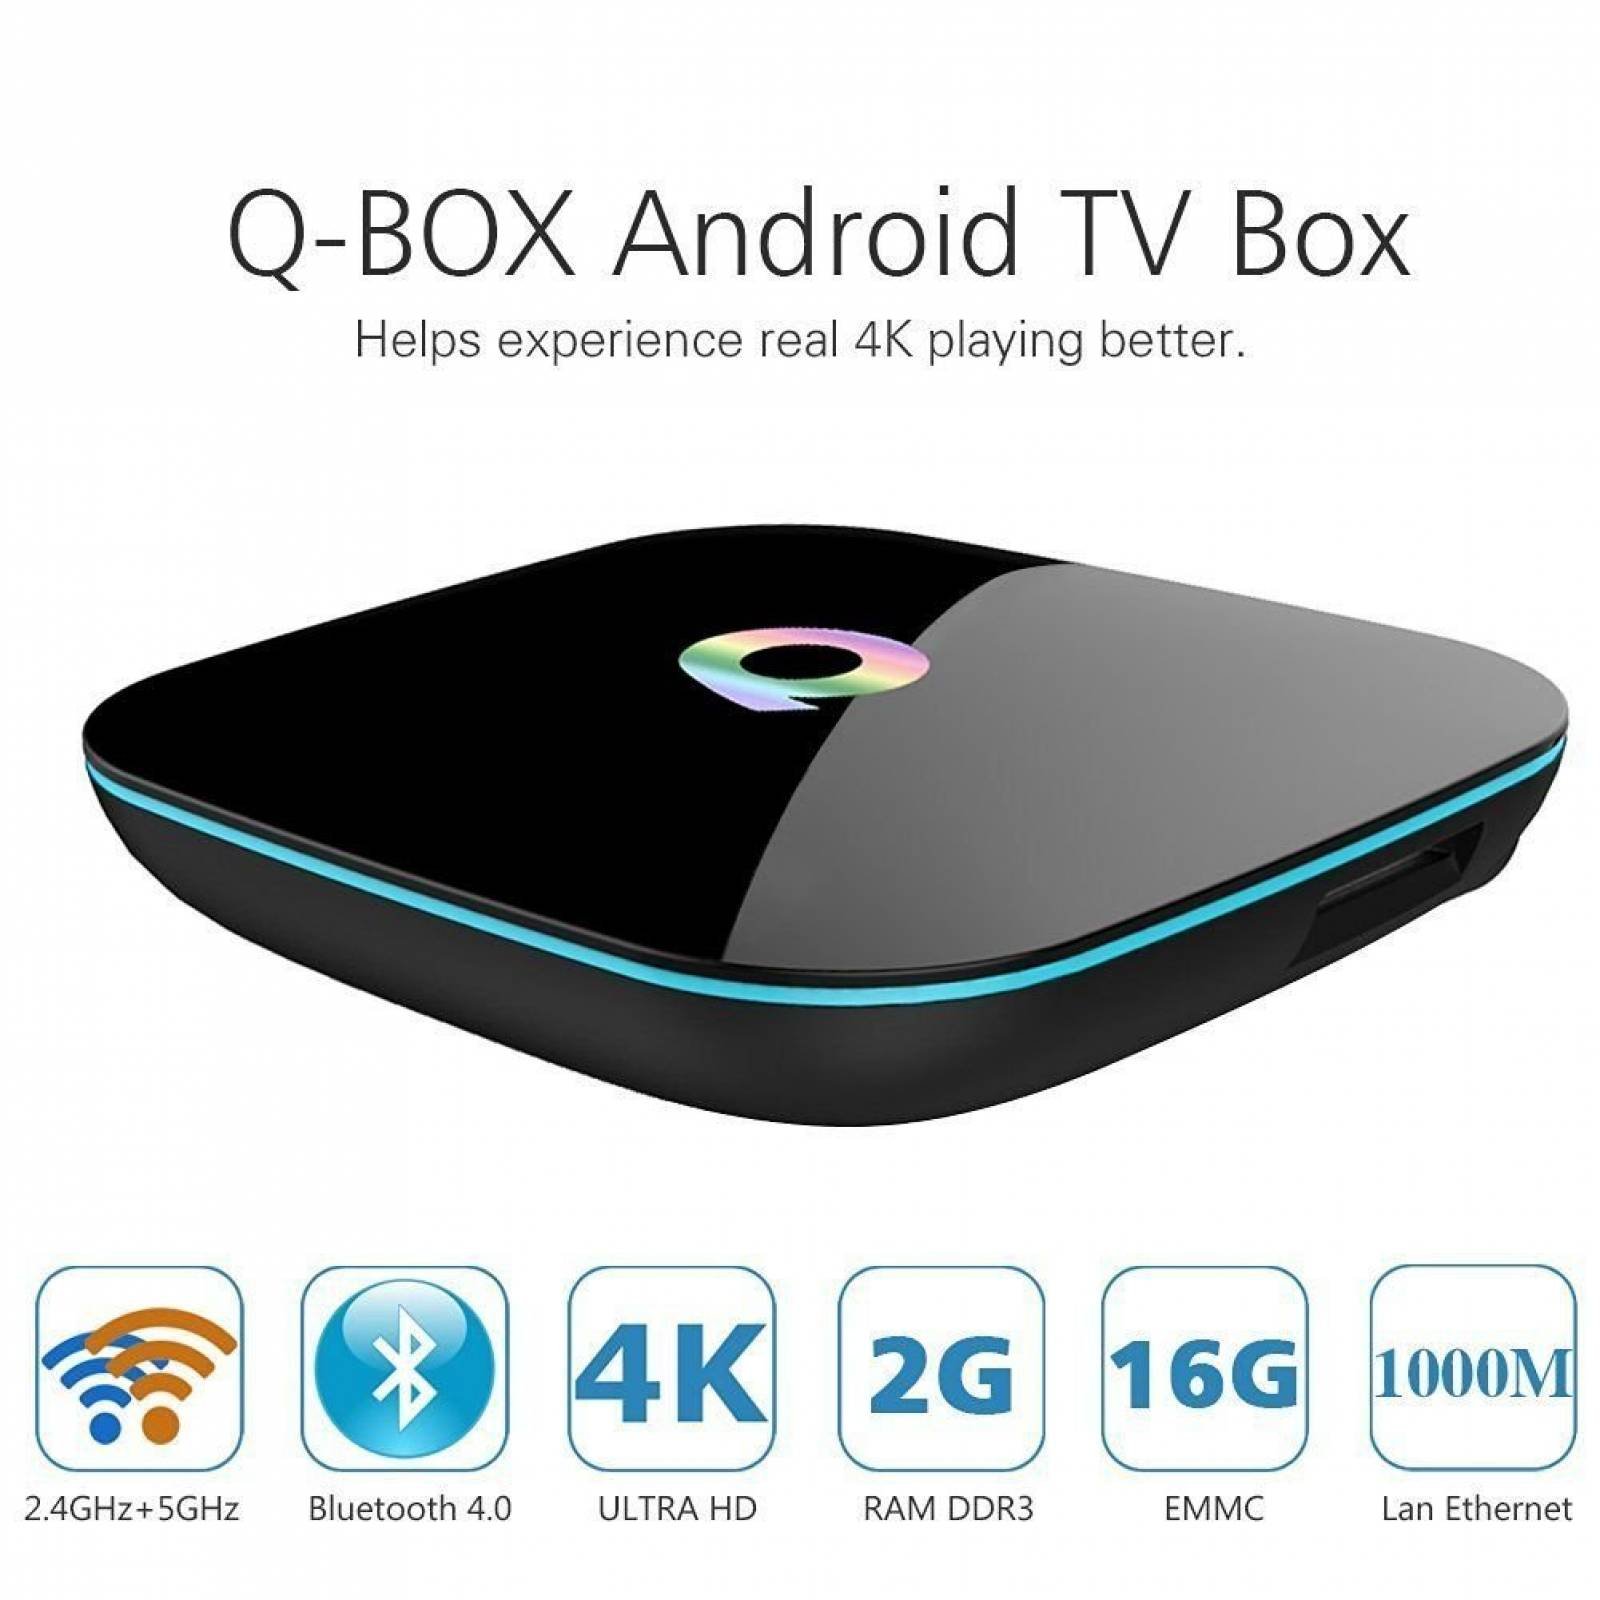 EVANPO EVANPO-QBOXI8 6.0 Android TV Box soy lógica S905 Quad